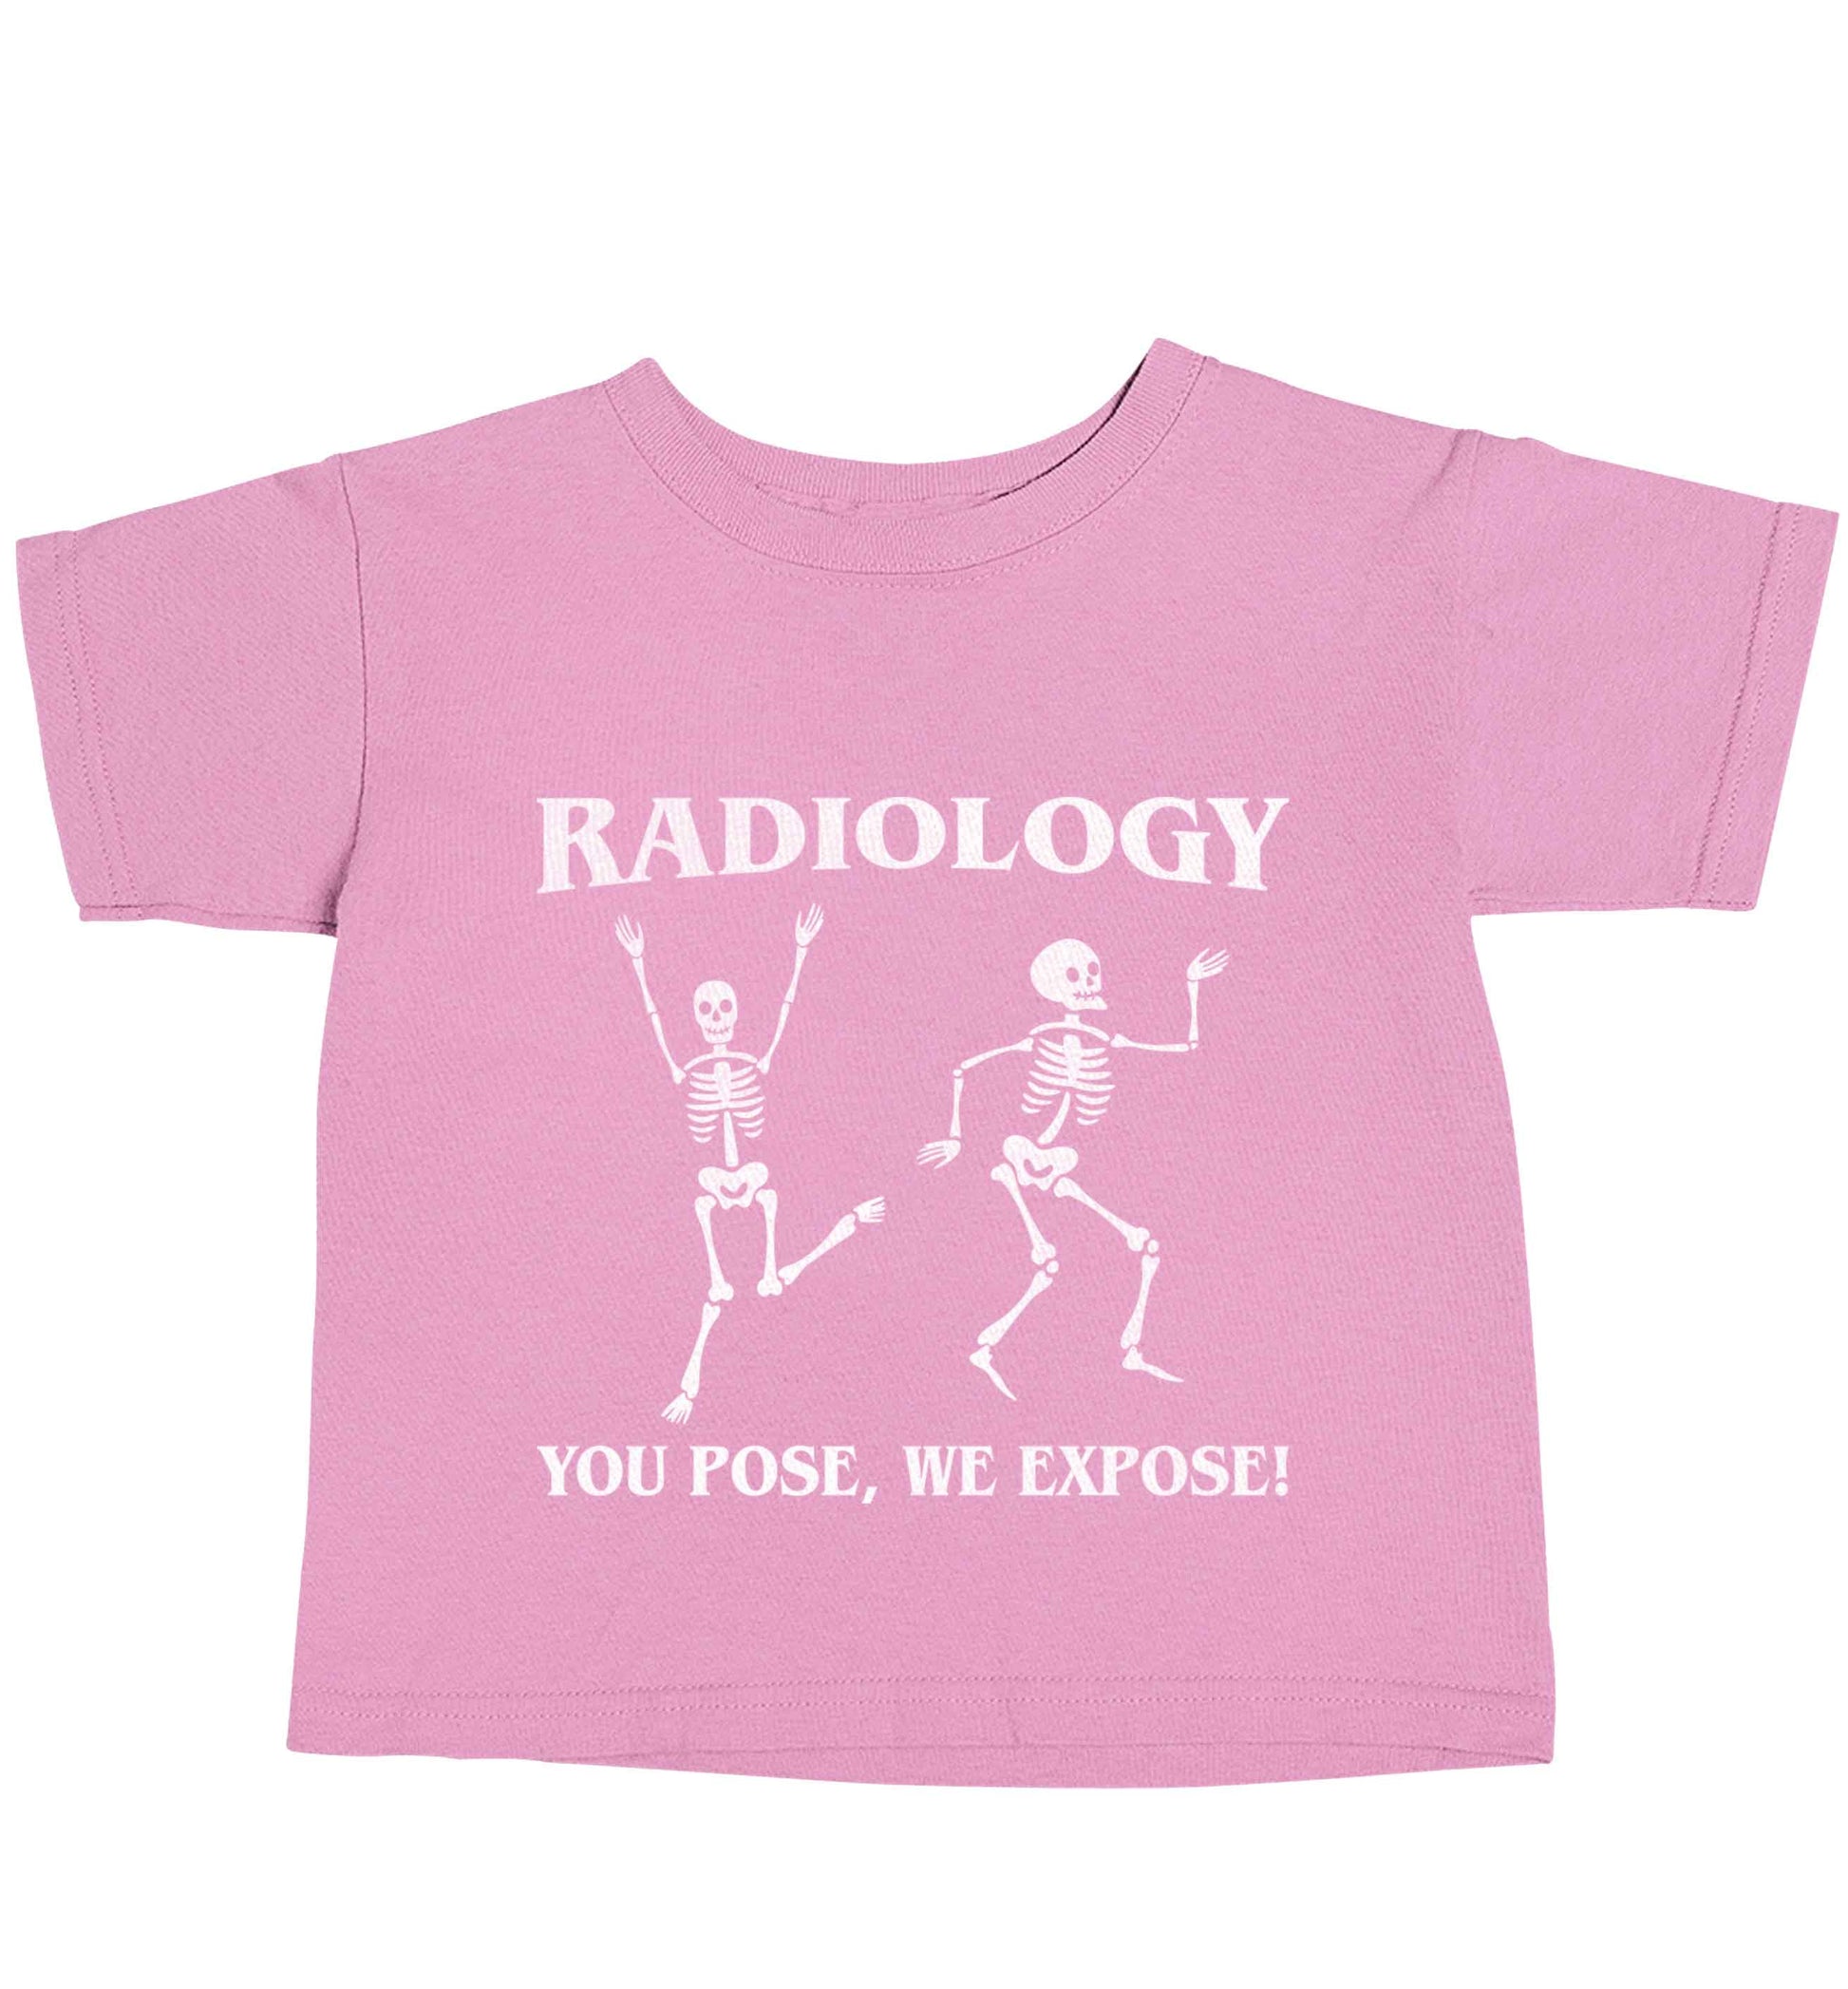 Radiology you pose we expose light pink baby toddler Tshirt 2 Years